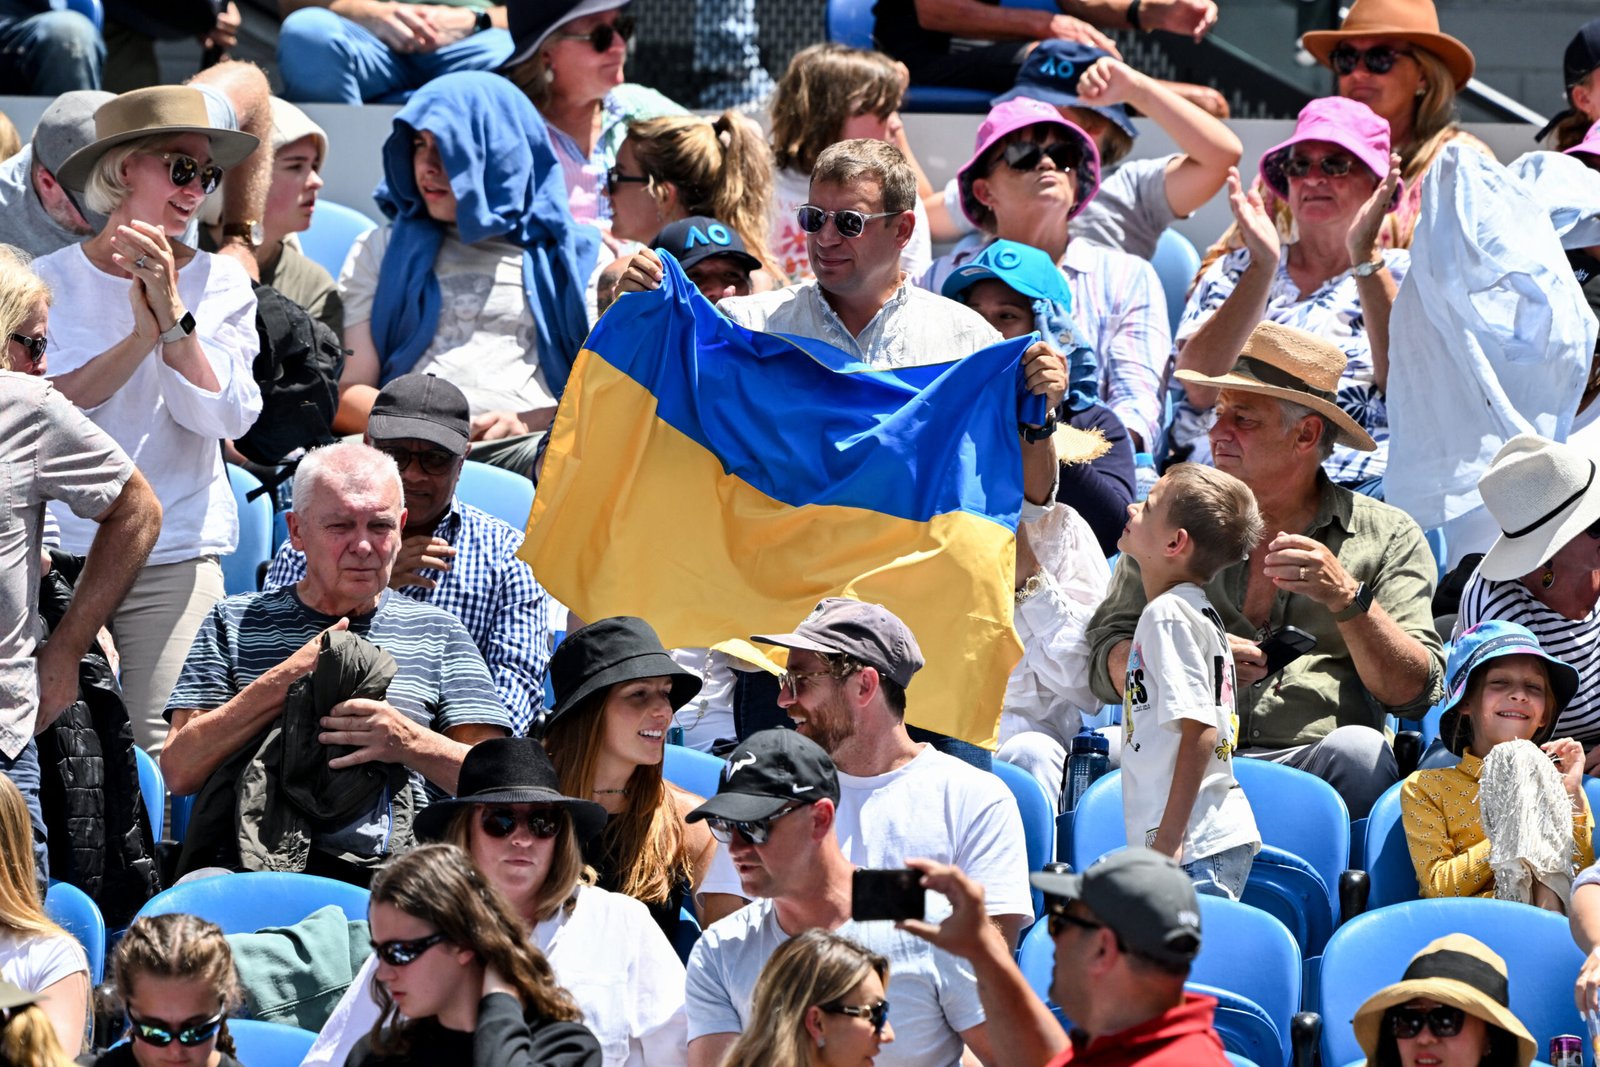 Ukrainian criticized for shaking Russian’s hand at Australian Open